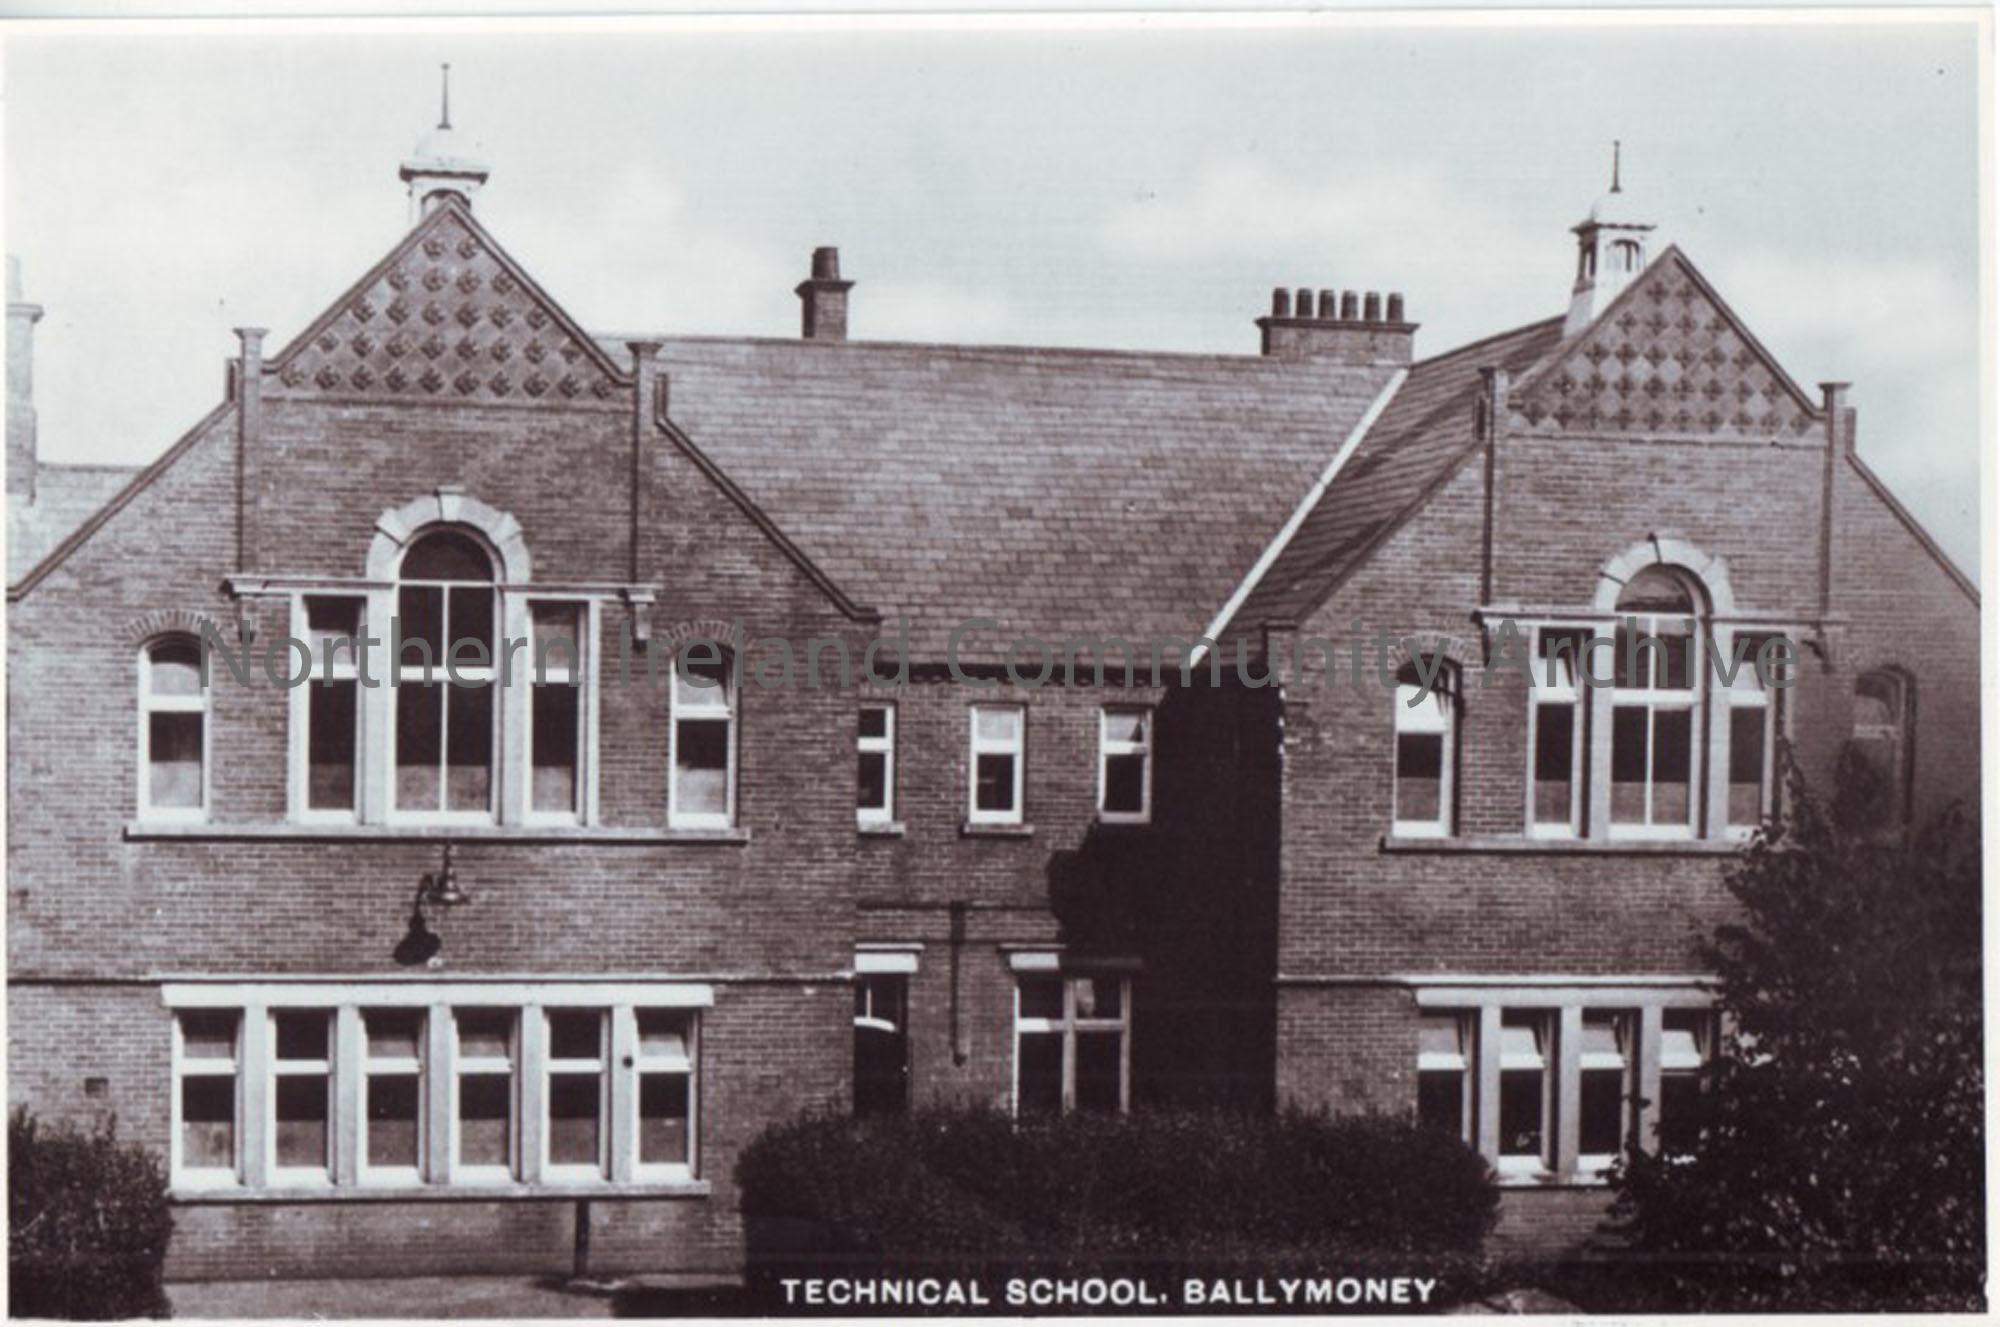 Technical School, Ballymoney